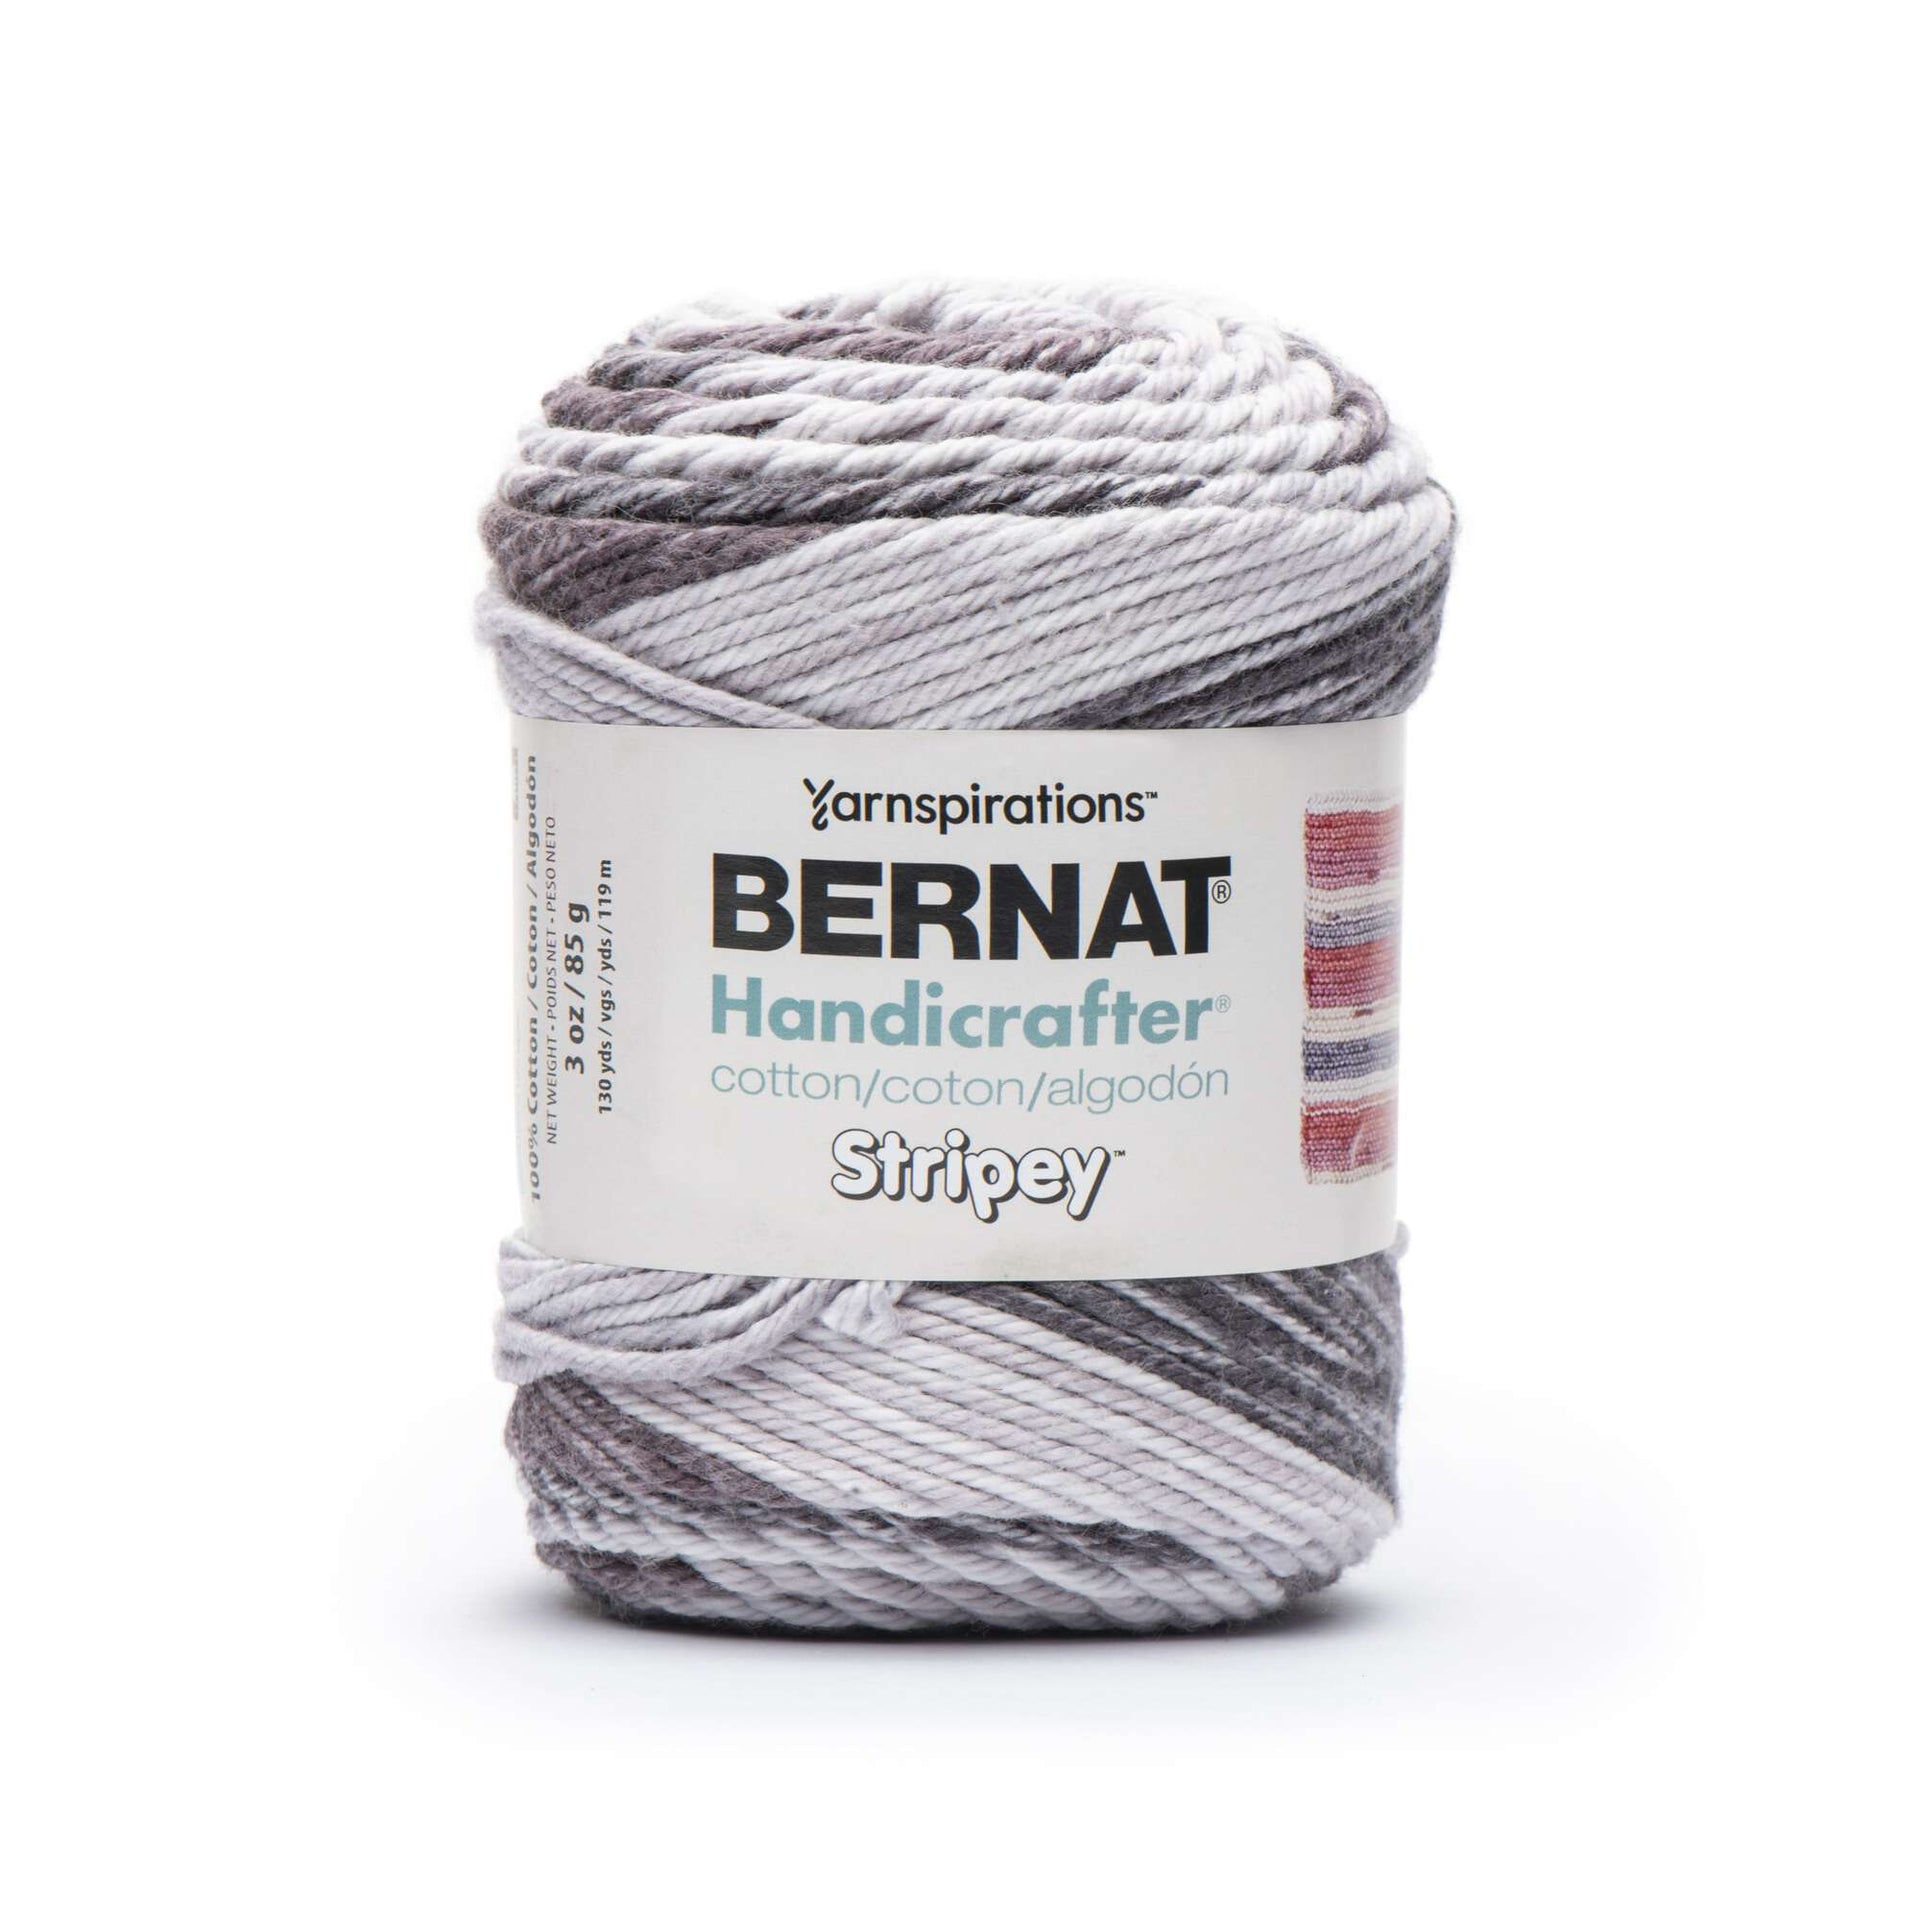 DENIM - Bernat Stripey Handicrafter 100% Cotton is 130 yards / 3 oz  (85g/119m). Medium Worsted #4. Color #15010 [Discontinued]